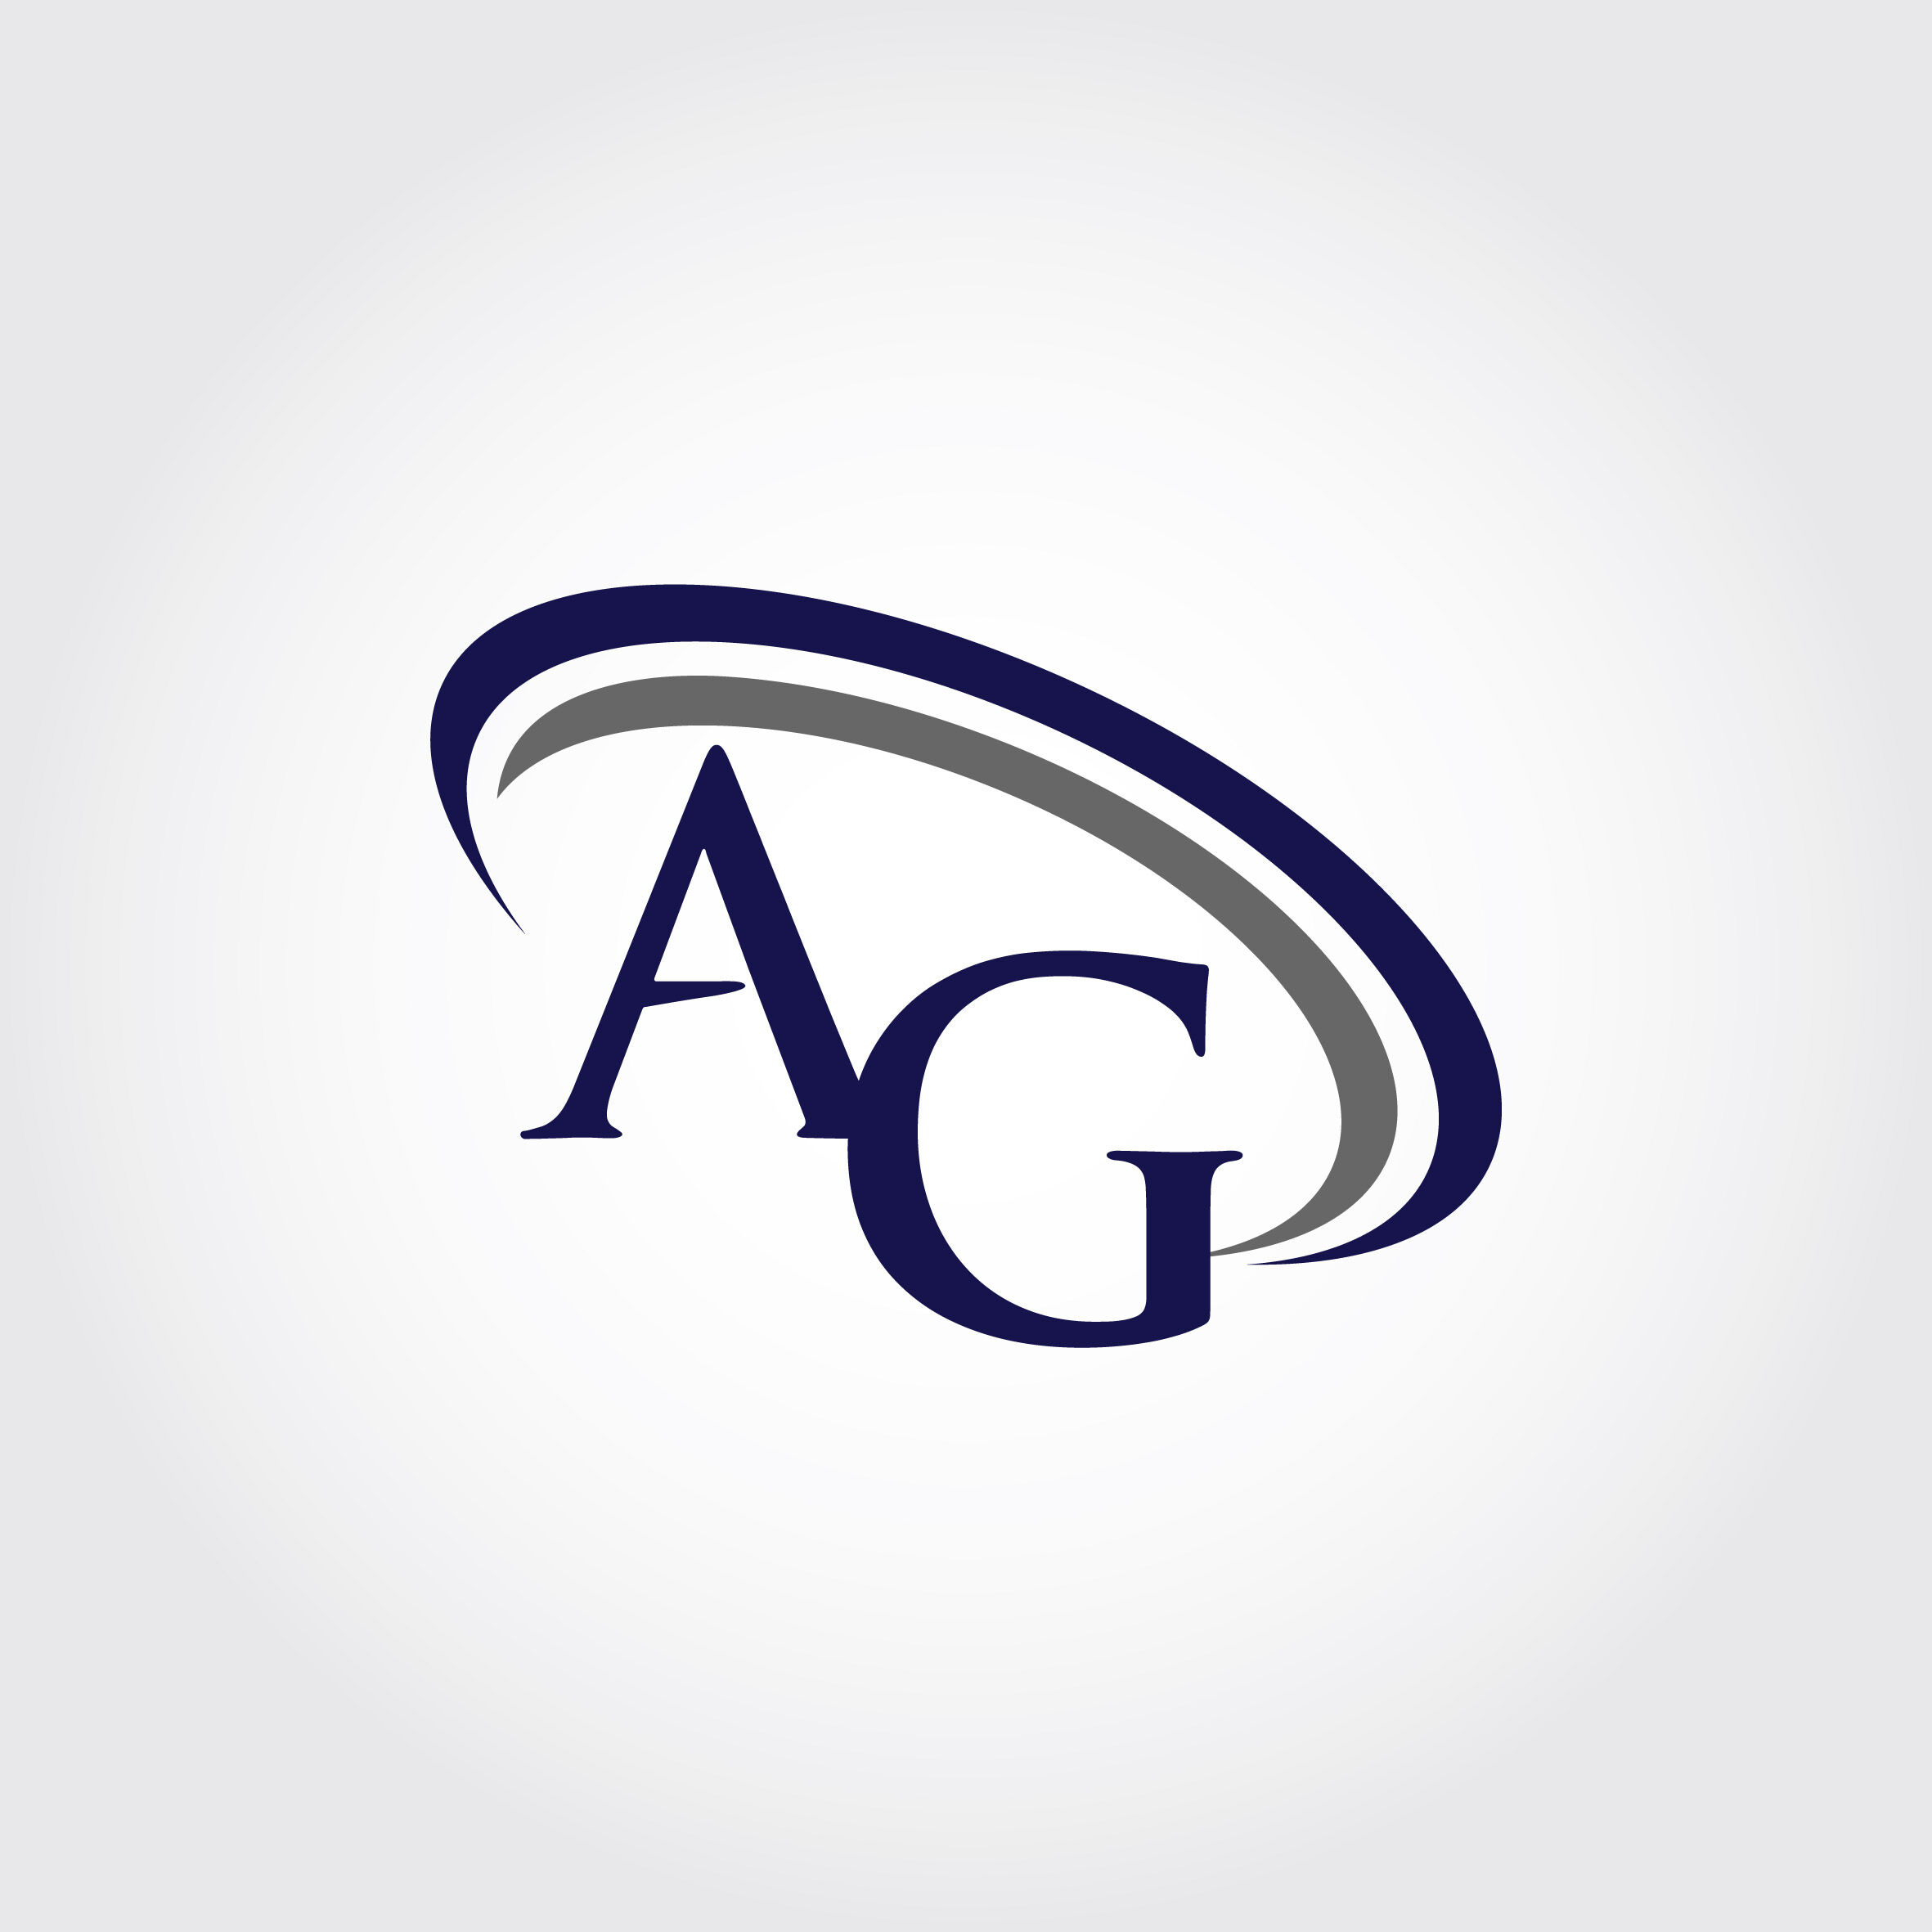 monogram-ag-logo-design-by-vectorseller-thehungryjpeg